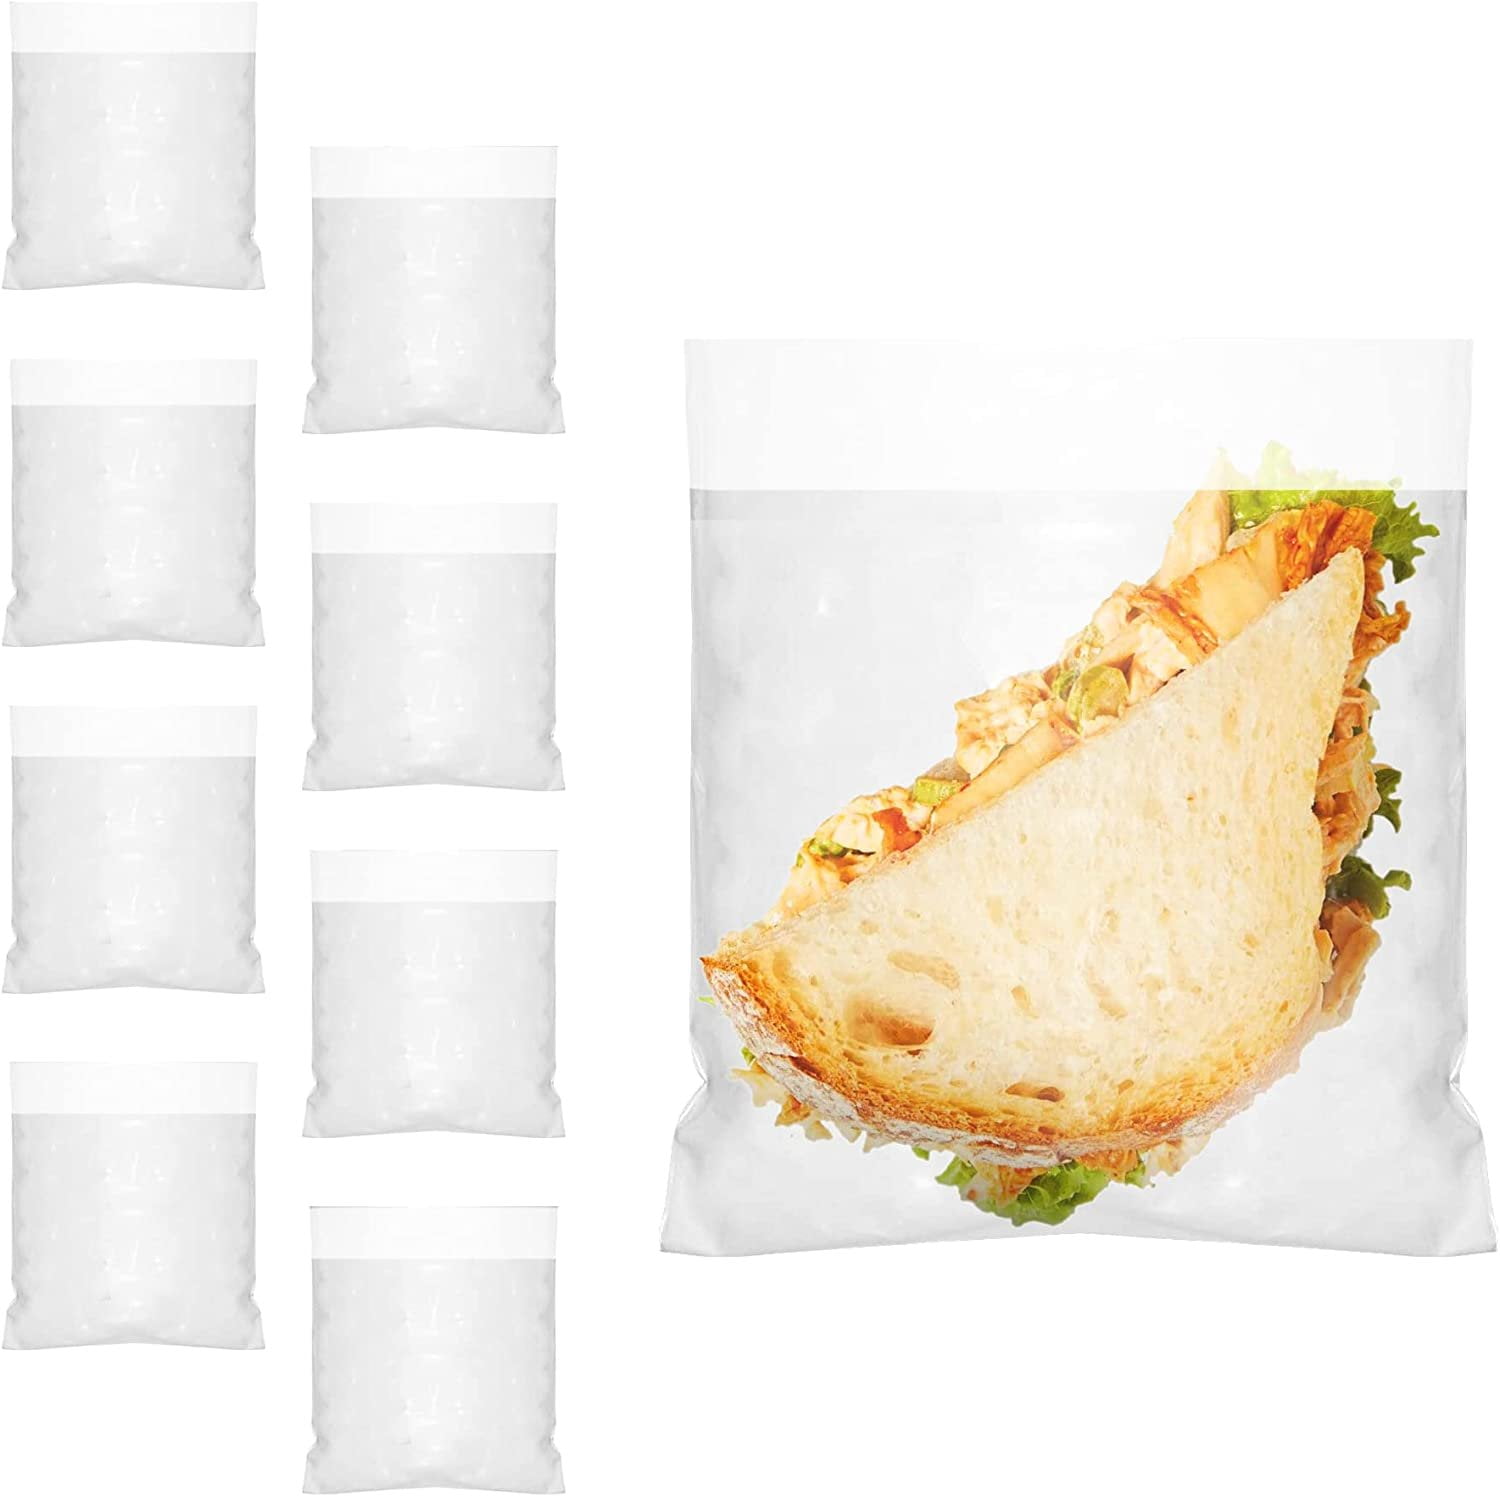 2000 Pack Clear Plastic Sandwich Bags 6.5 x 7.5 /w Flip Top 0.7